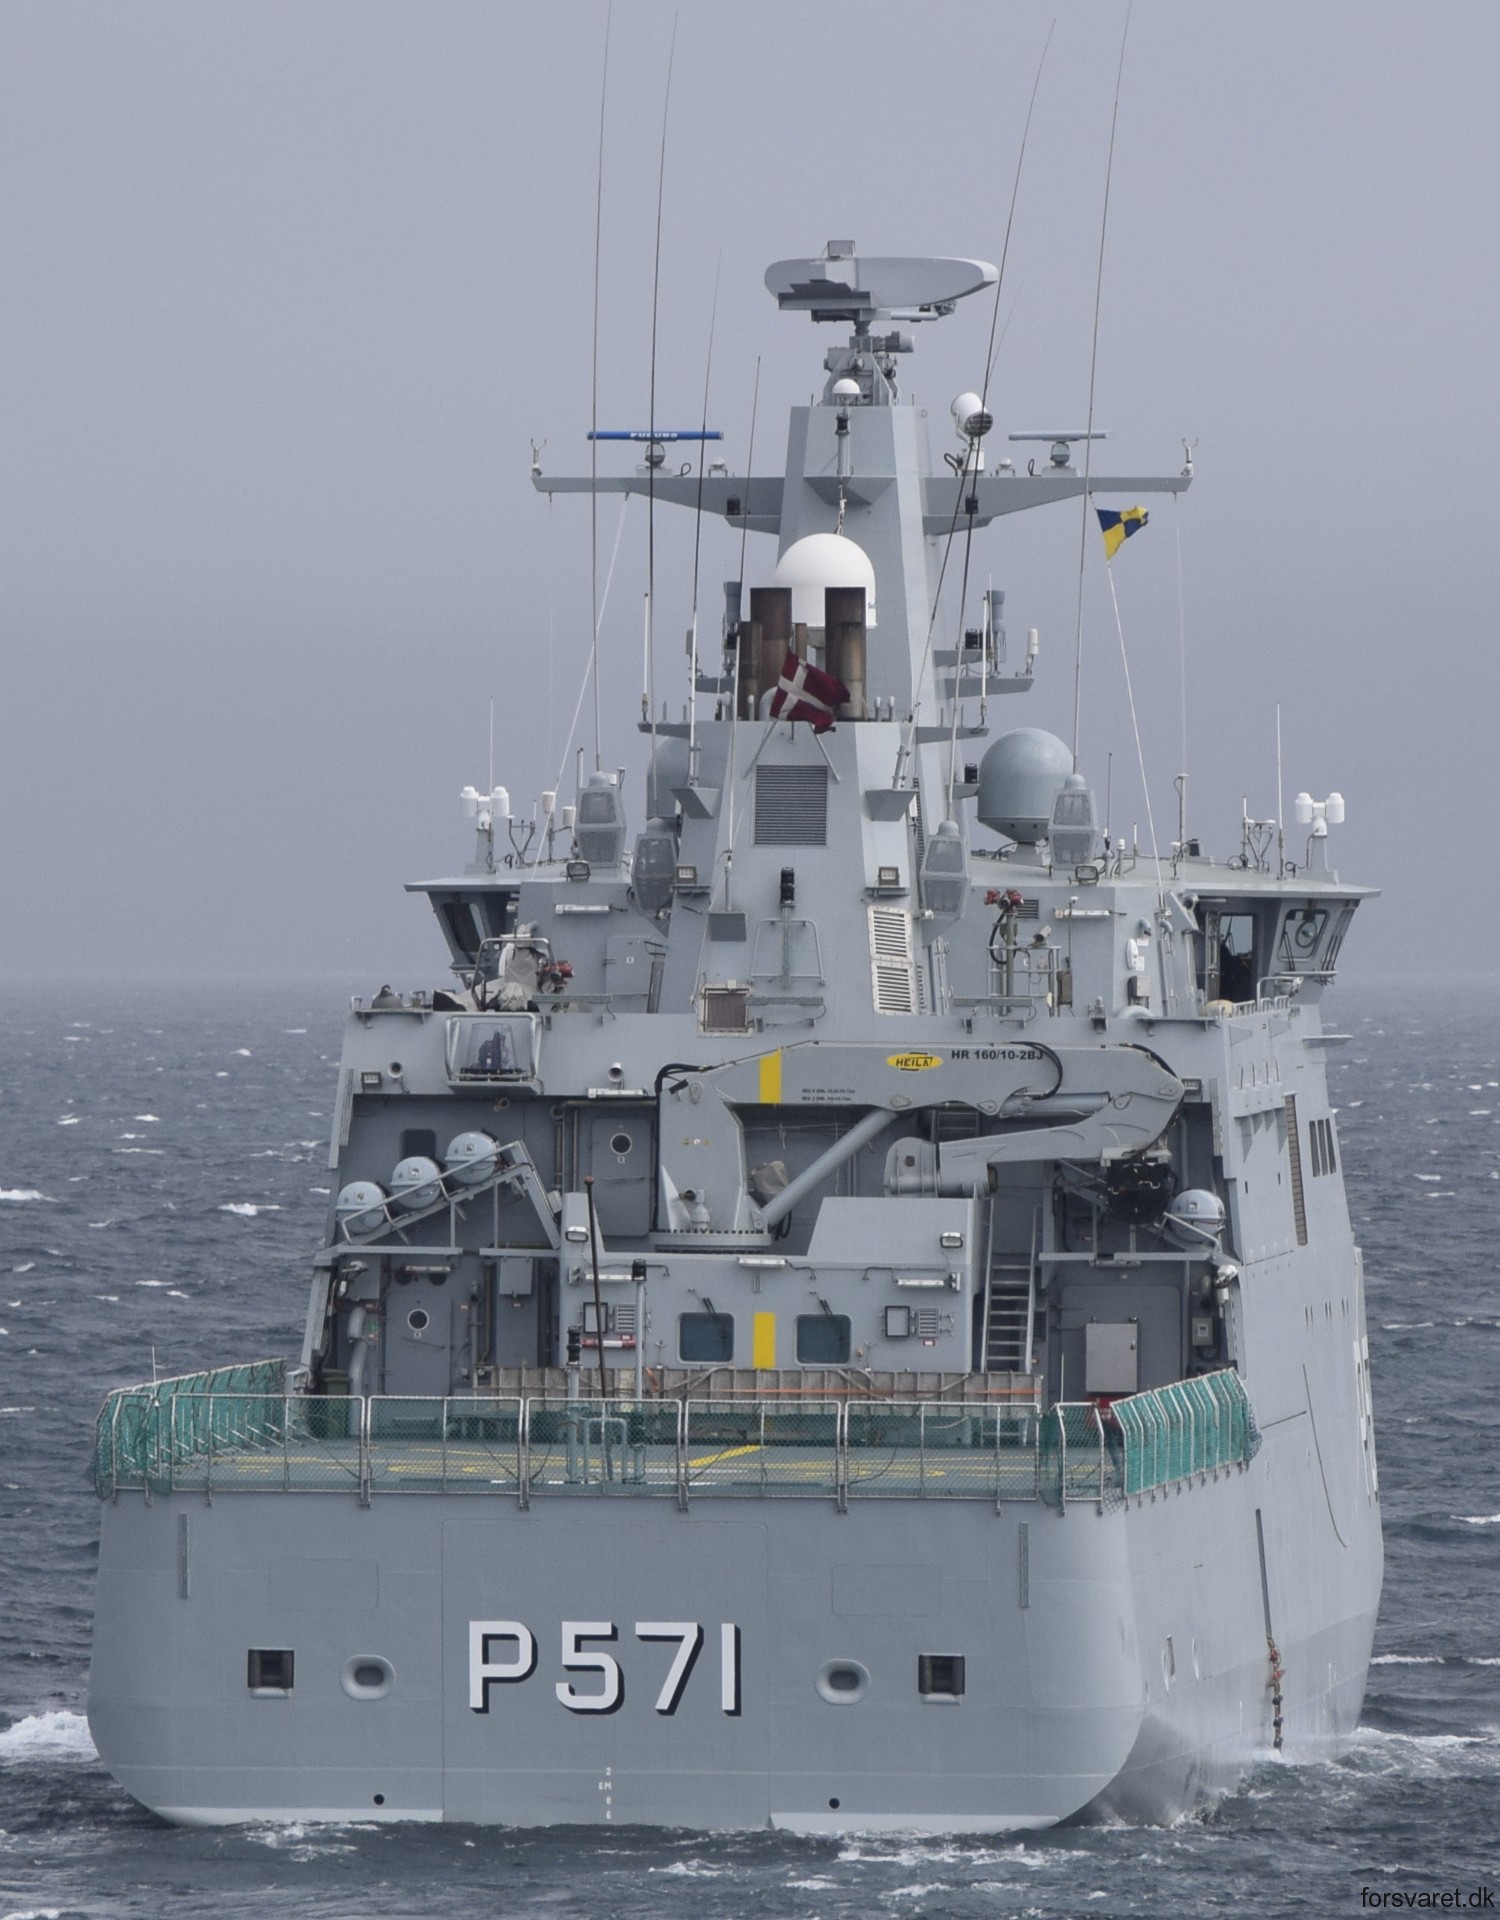 p-571 hdms ejnar mikkelsen knud rasmussen class offshore patrol vessel opv royal danish navy inspektionsfartøj 05